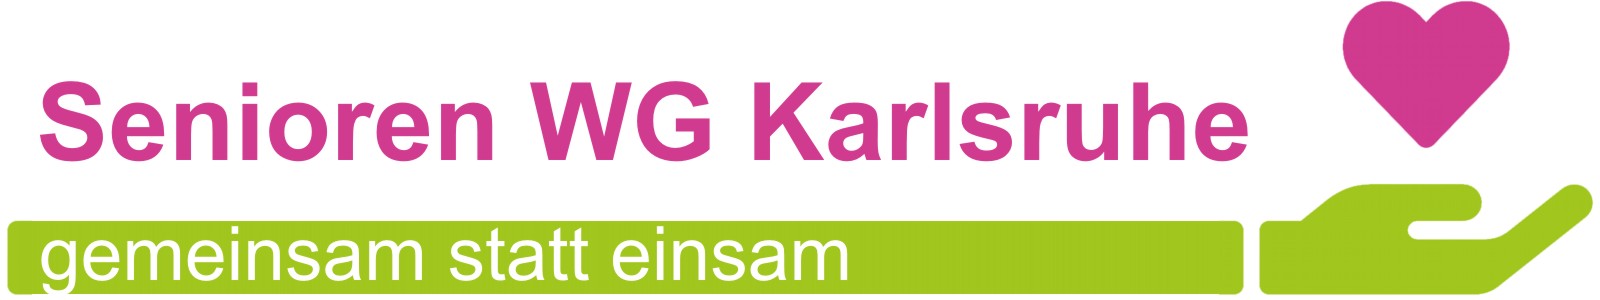 SeniorenWG Karlsruhe Logo